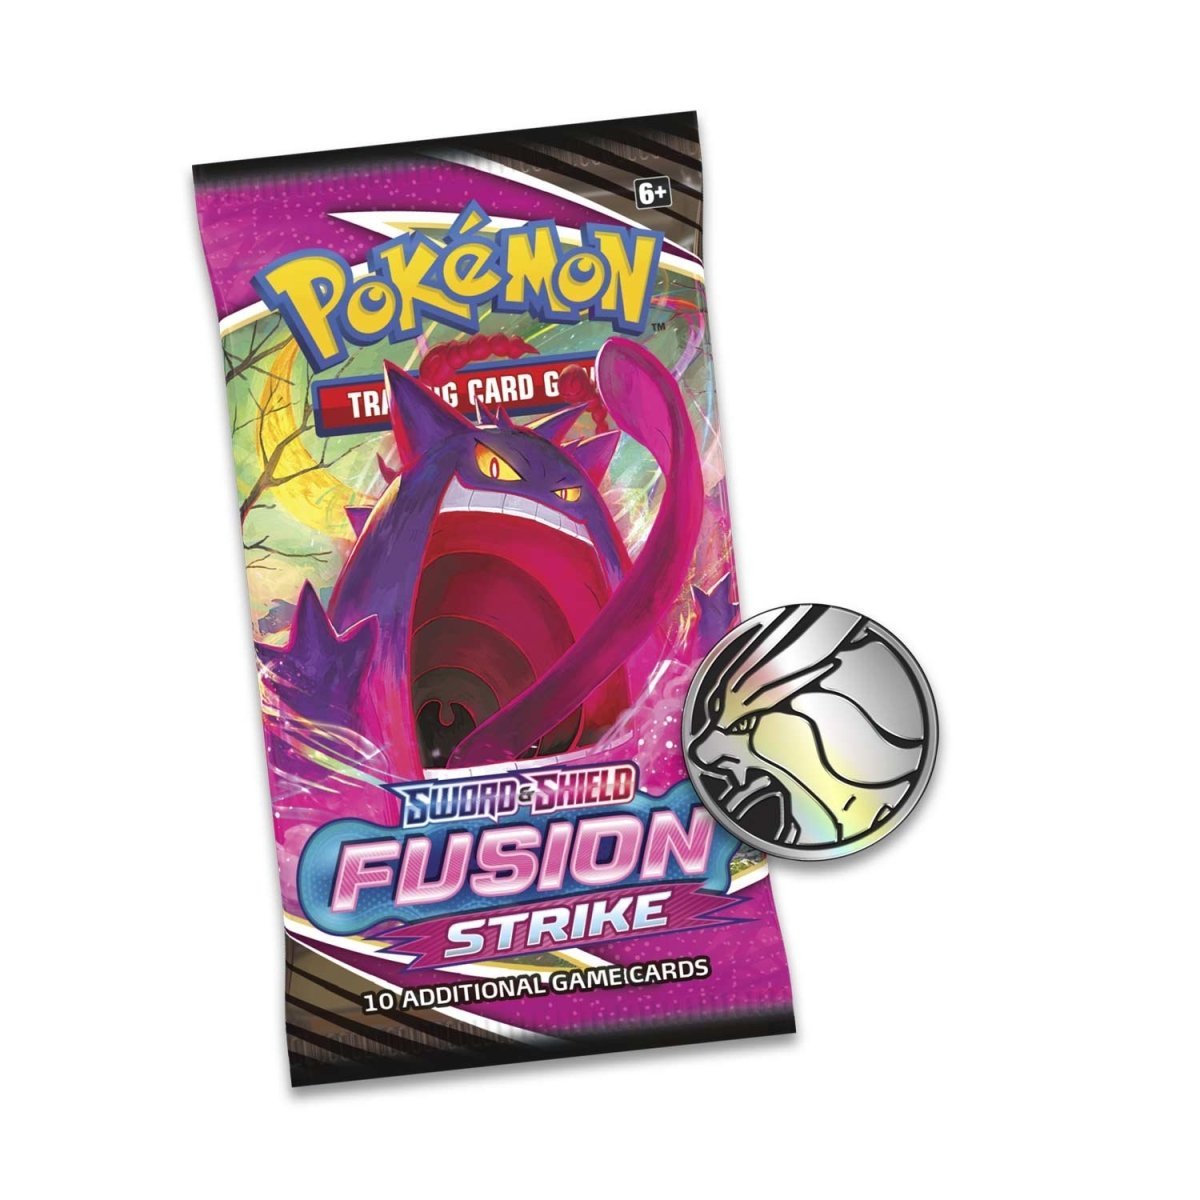 Pokémon: Sword & Shield - Fusion Strike Three-Booster Blister Pack (Eevee or Espeon) - PokeRvm